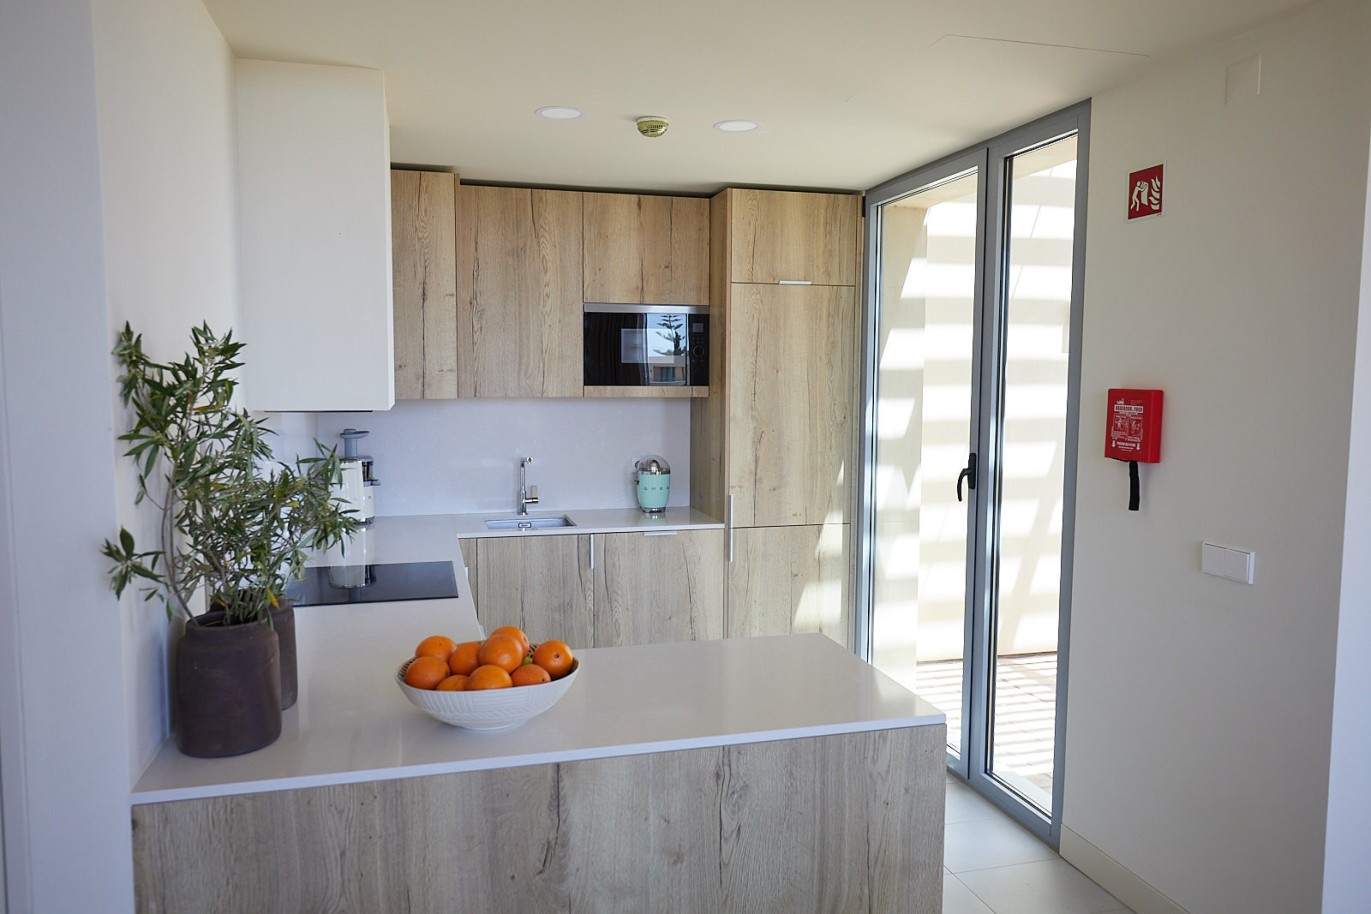 2 bedroom apartment in resort, for sale in Porches, Algarve_228843